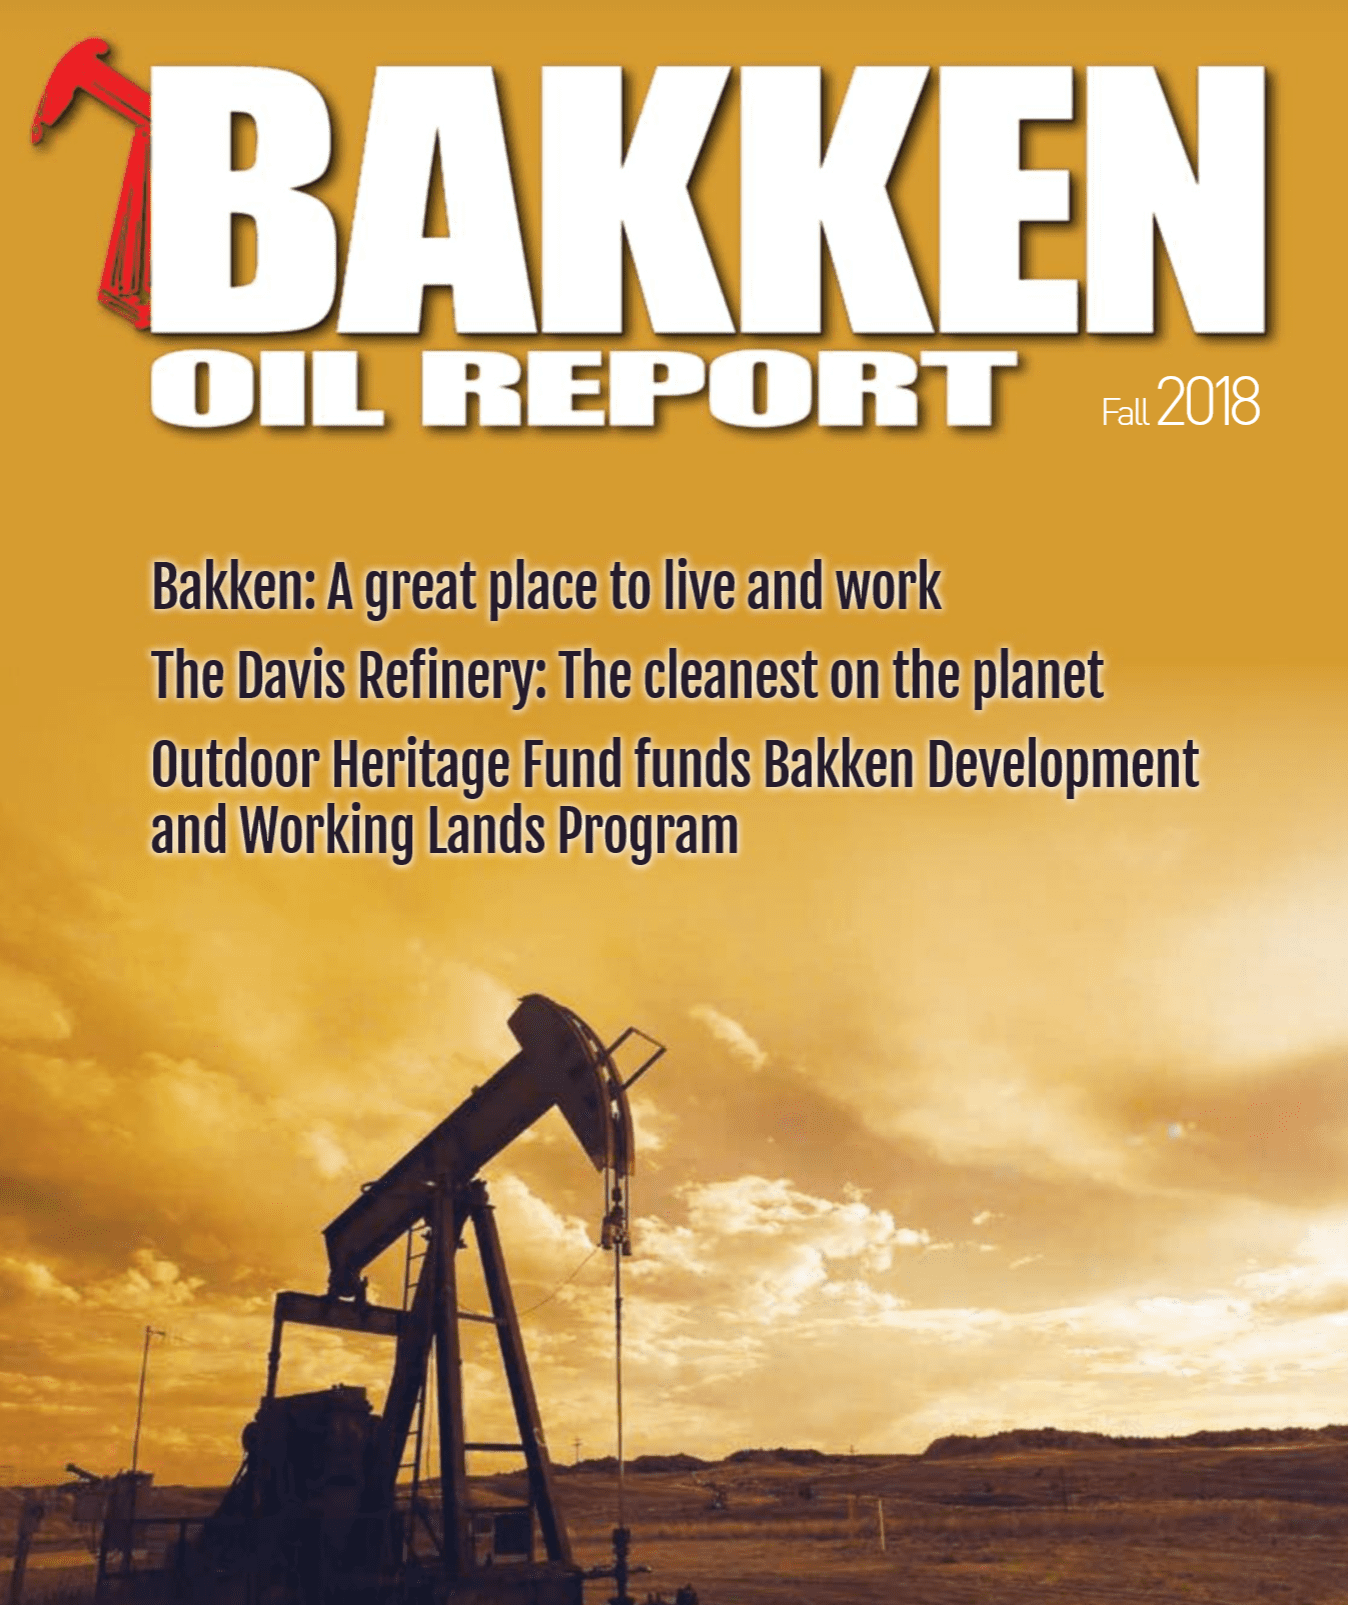 Bakken Oil Report Fall 2018